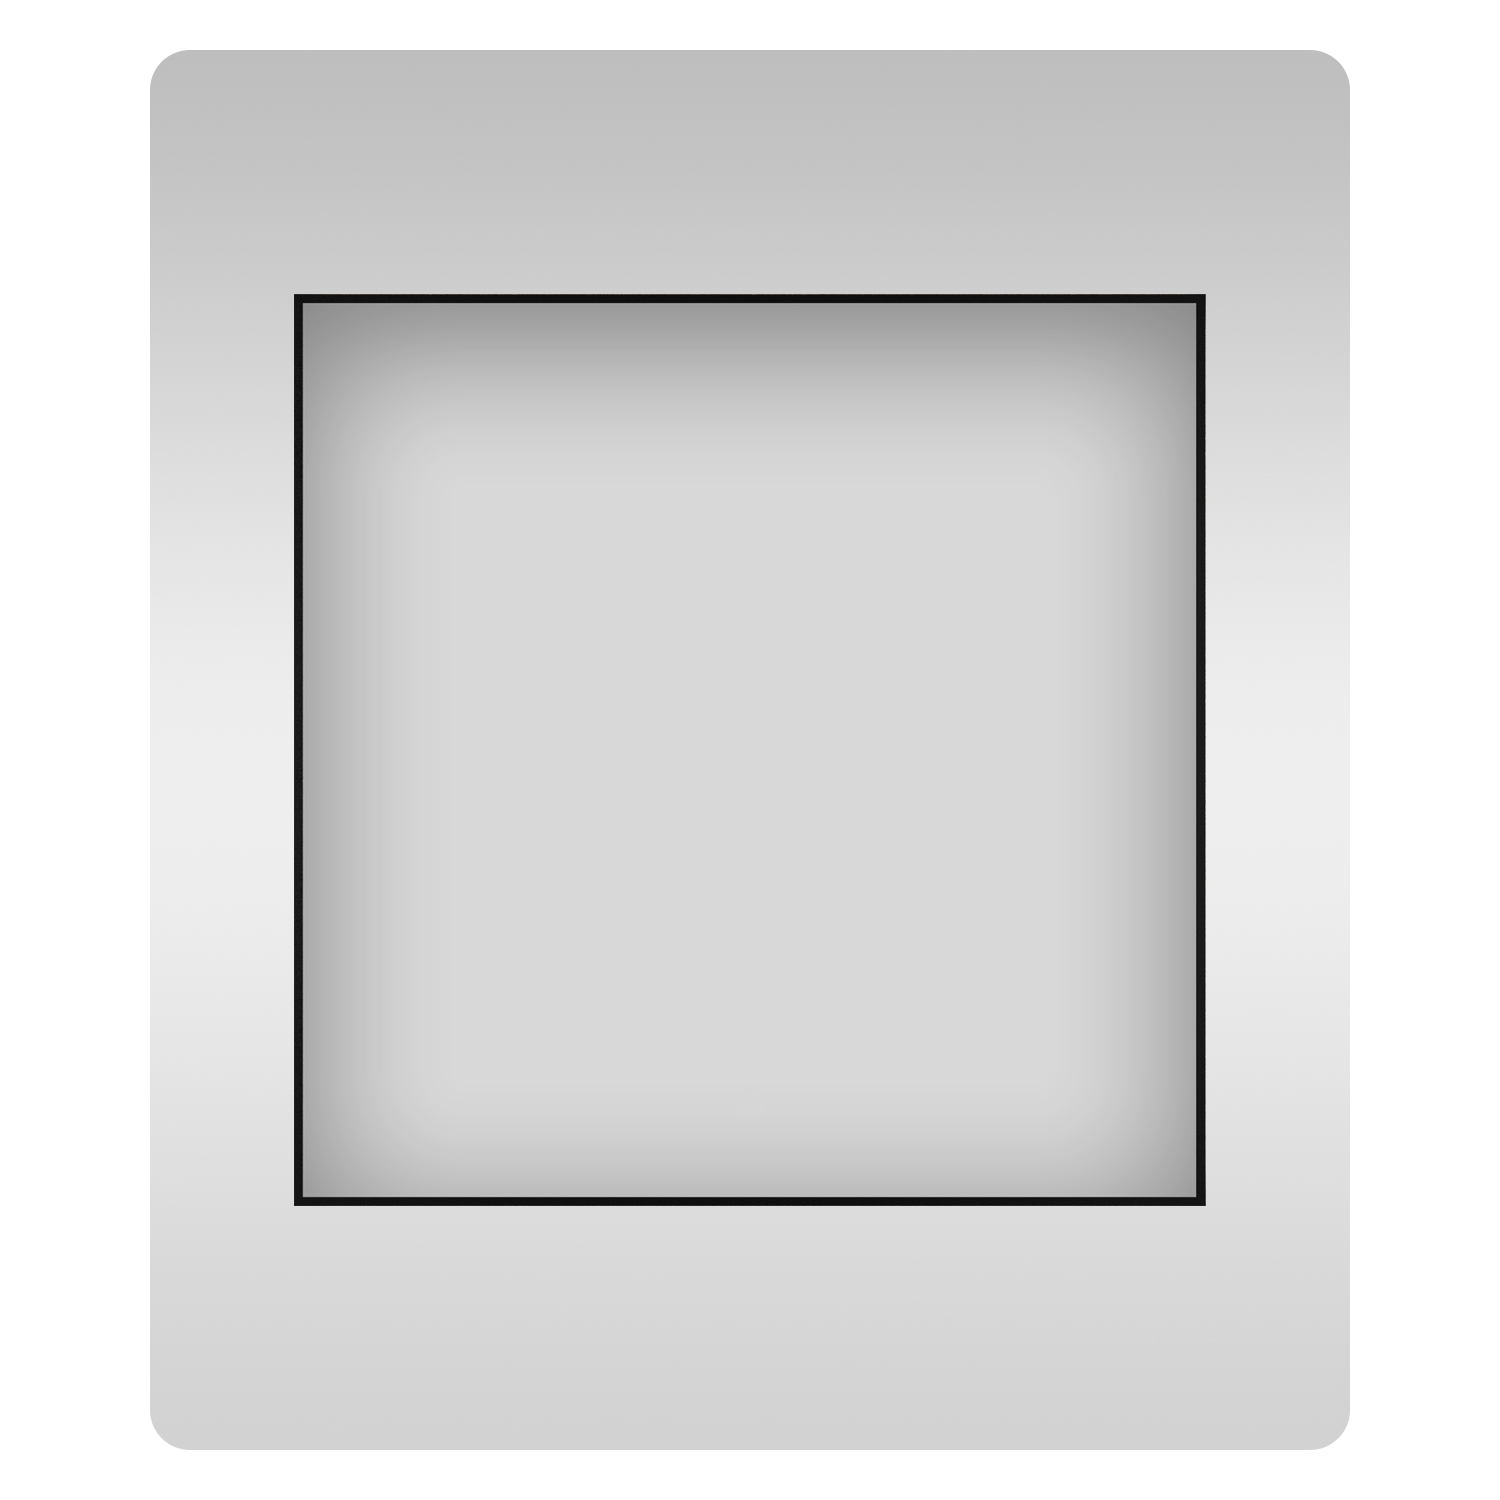 Влагостойкое квадратное зеркало Wellsee 7 Rays' Spectrum 172200330, 80х80 см